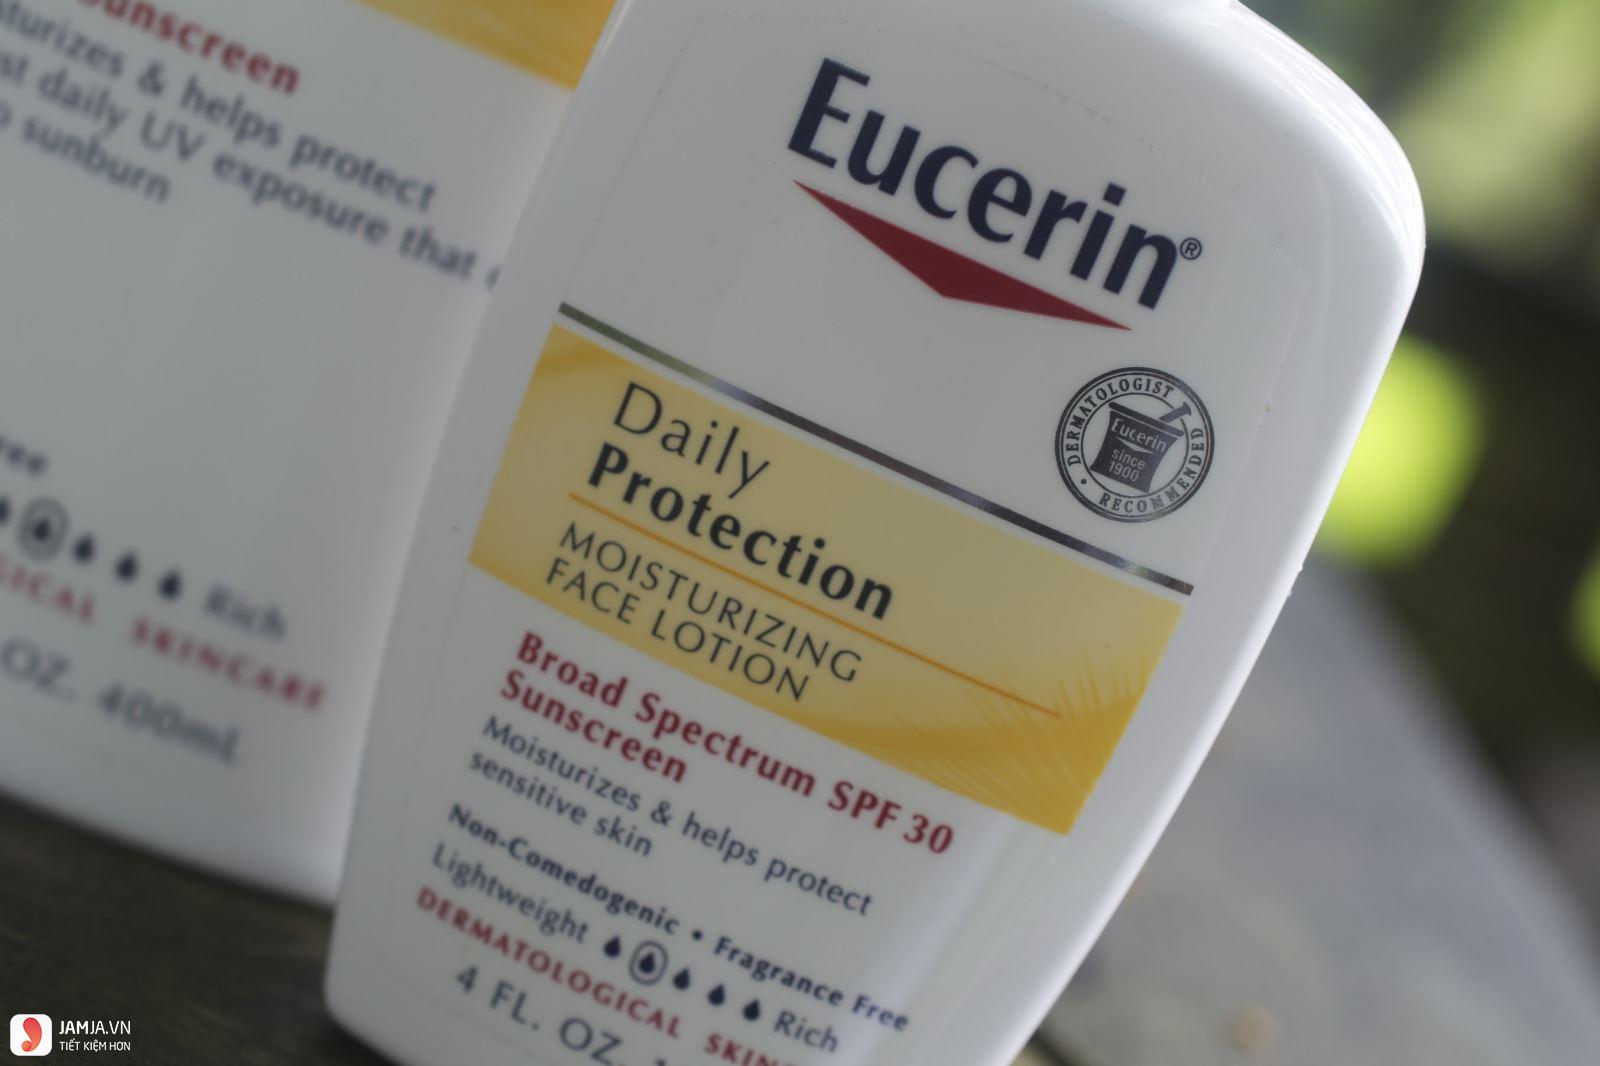 Eucerin Daily protection moisturizing lotion SPF 30